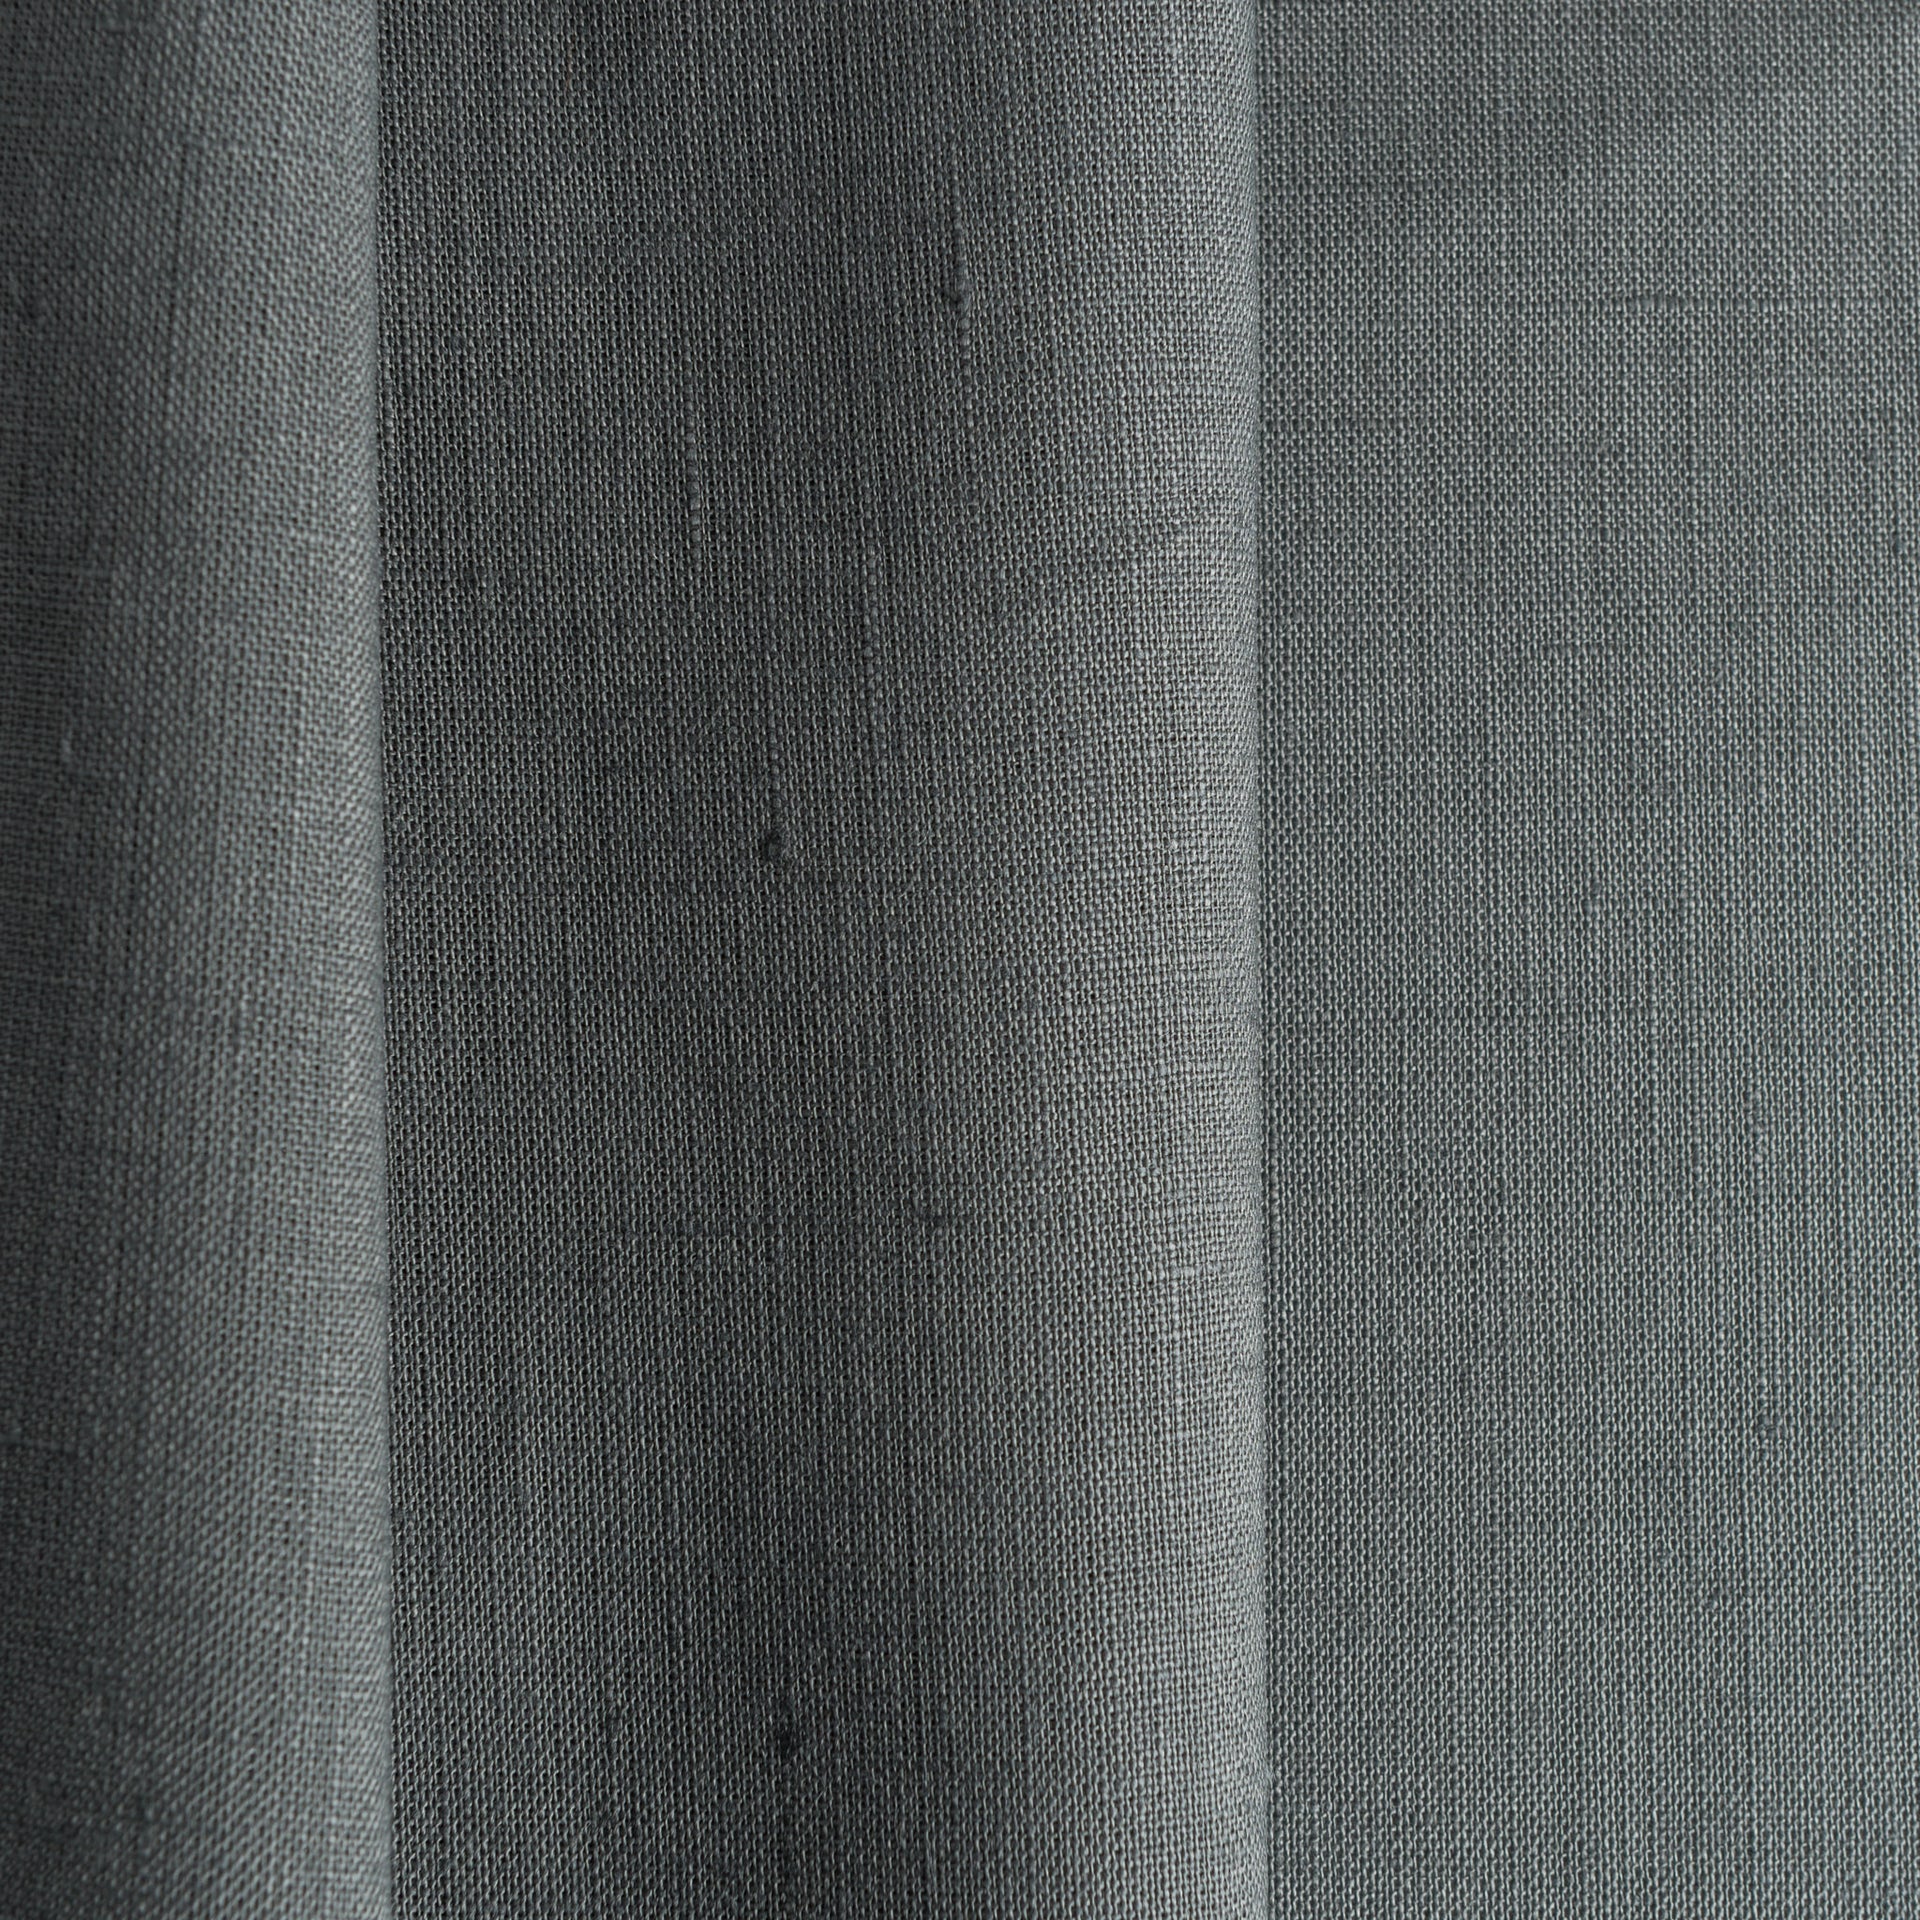 Iron Grey Linen Fabric